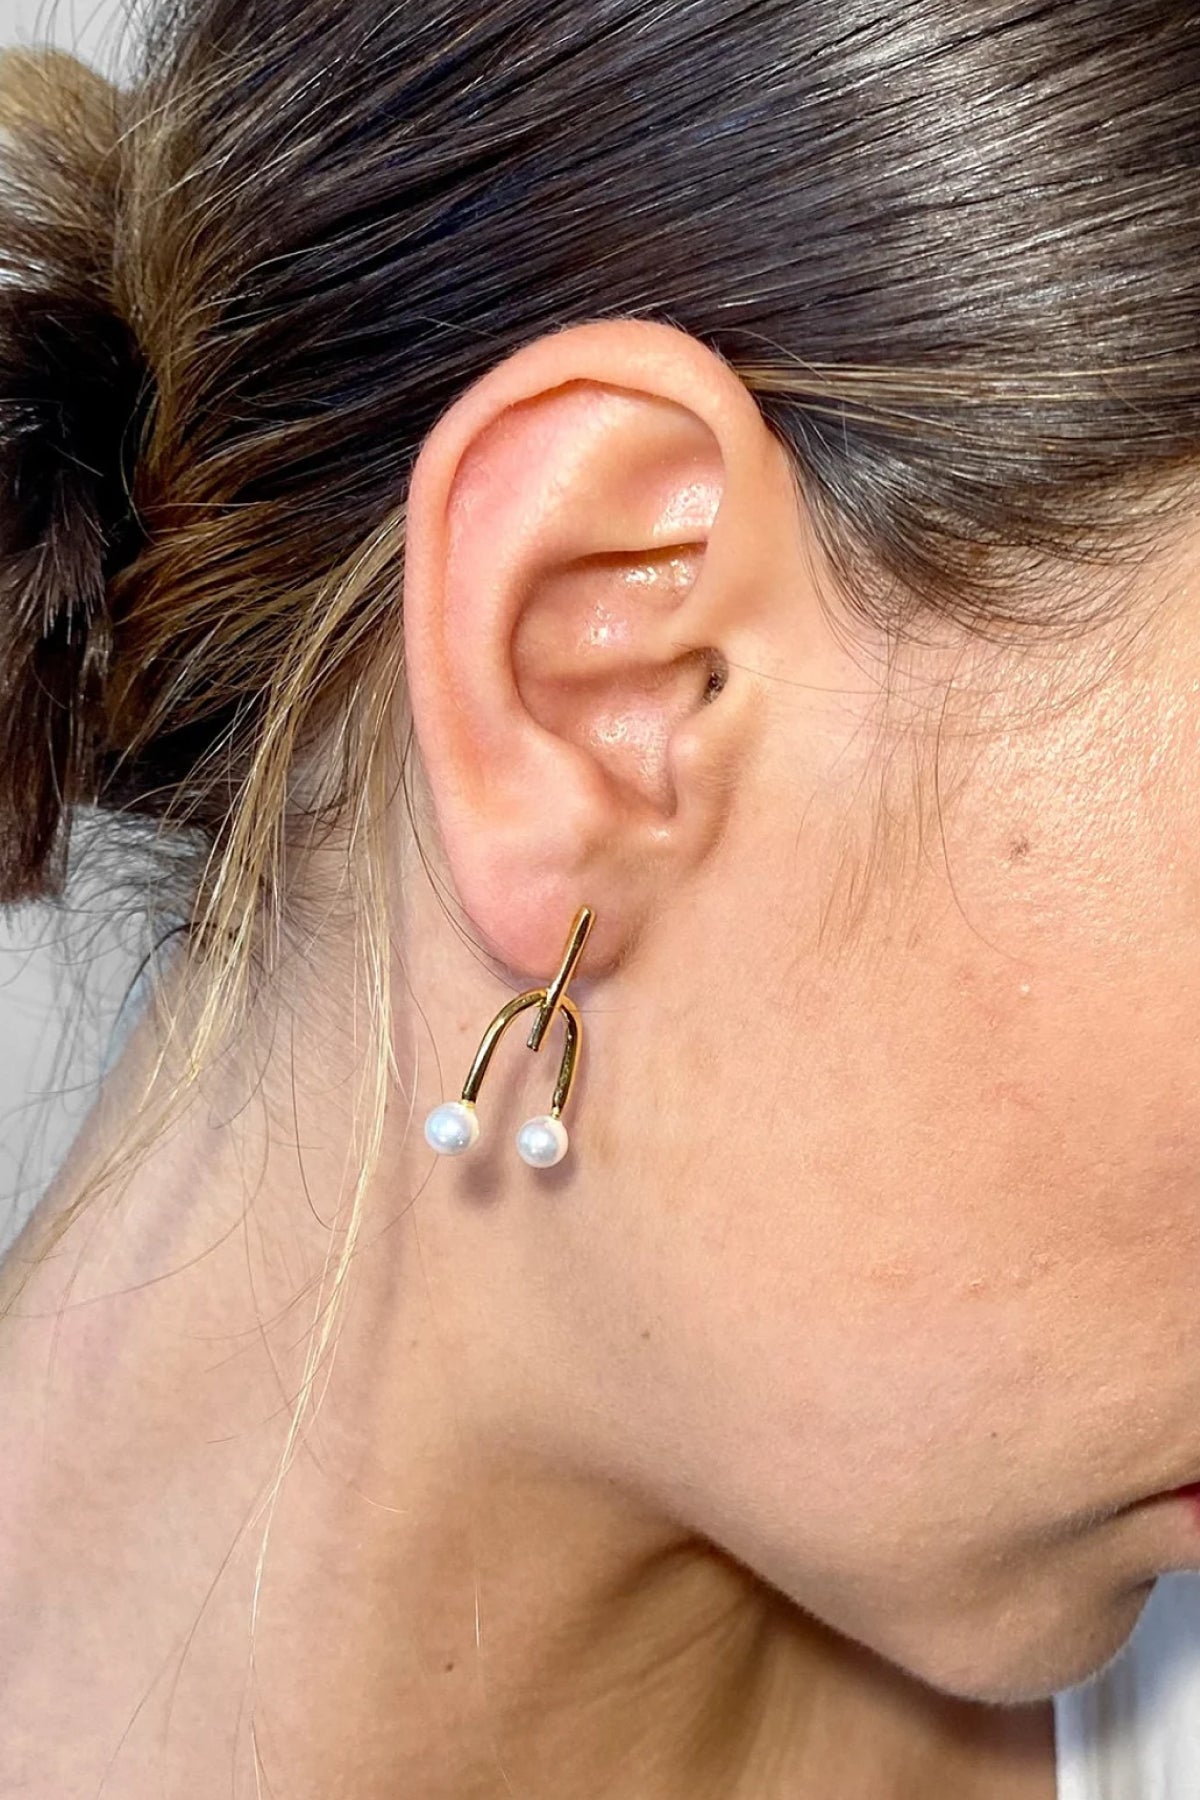 Female & Male Harmony 18K Gold Filled Designer Earrings with Baroque Pearl - Earrings